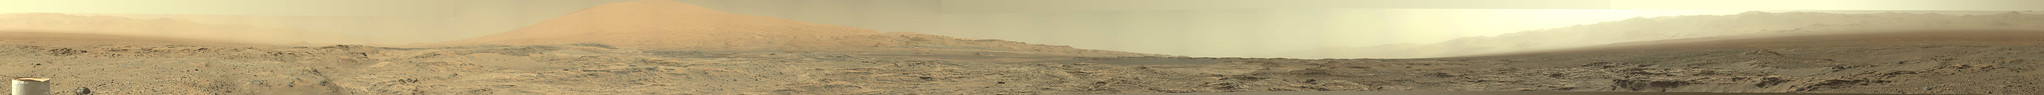 Curiosity: cratere Gale360 - sol 1081